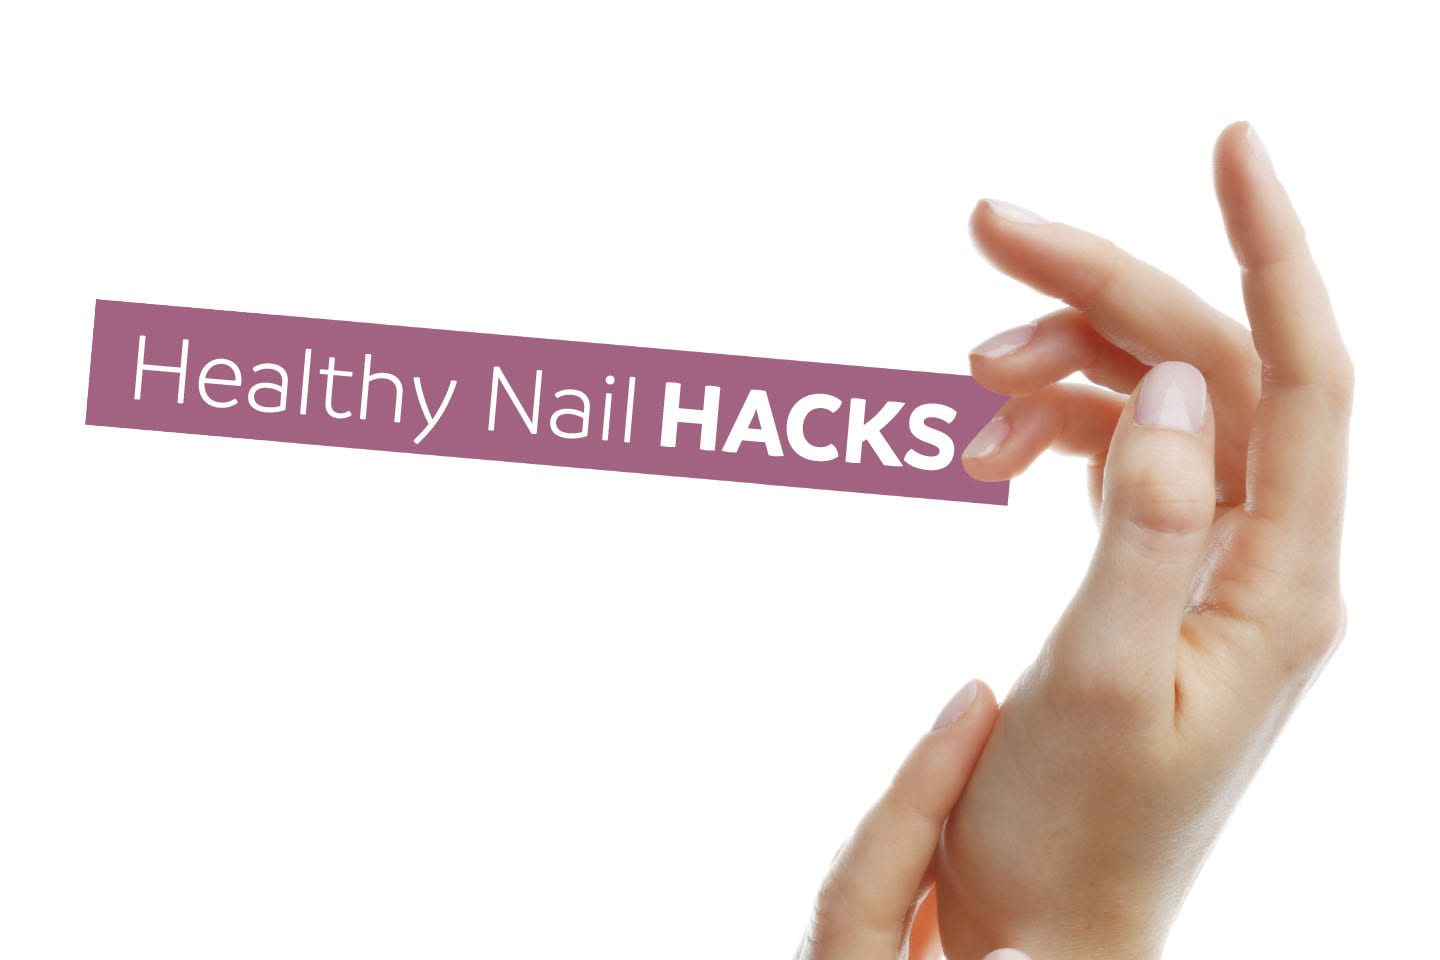 Healthy nail hacks chattanooga fingernails